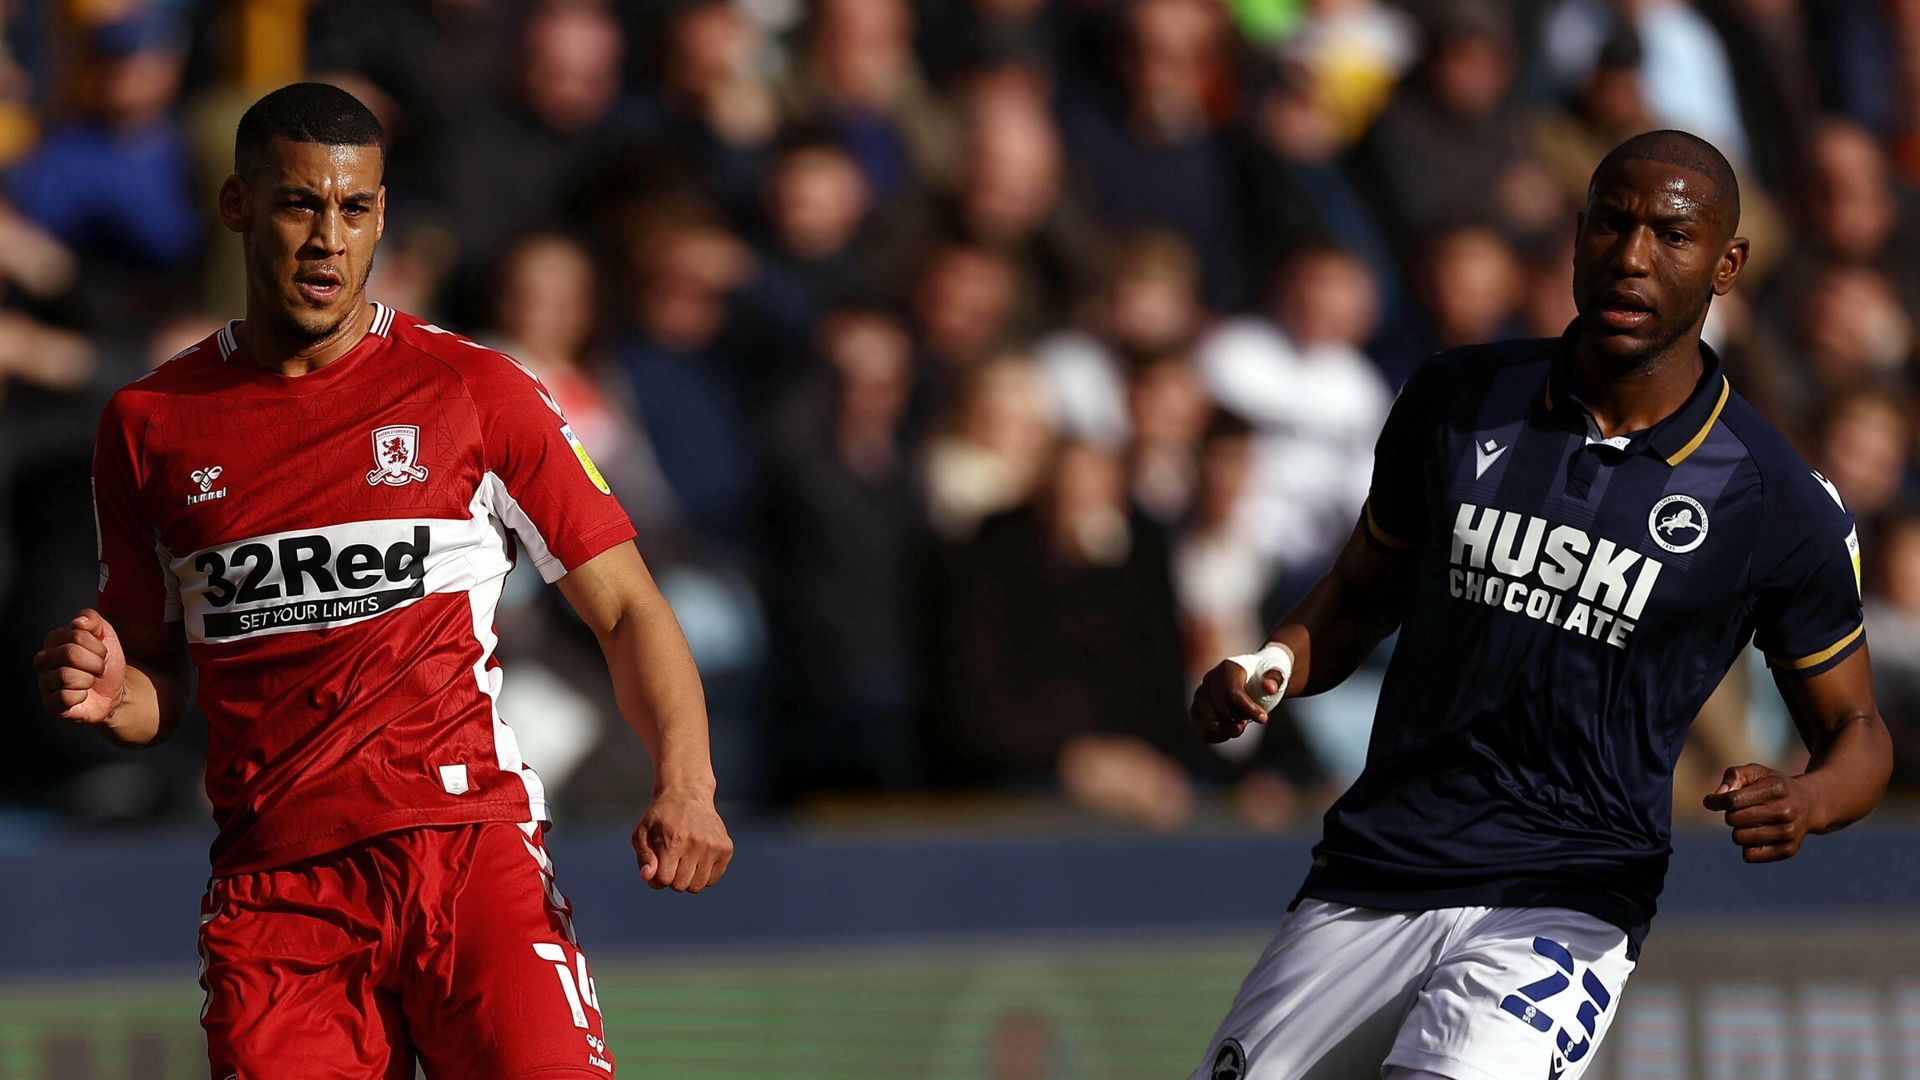 Play-off hopefuls Millwall and Boro draw at The Den